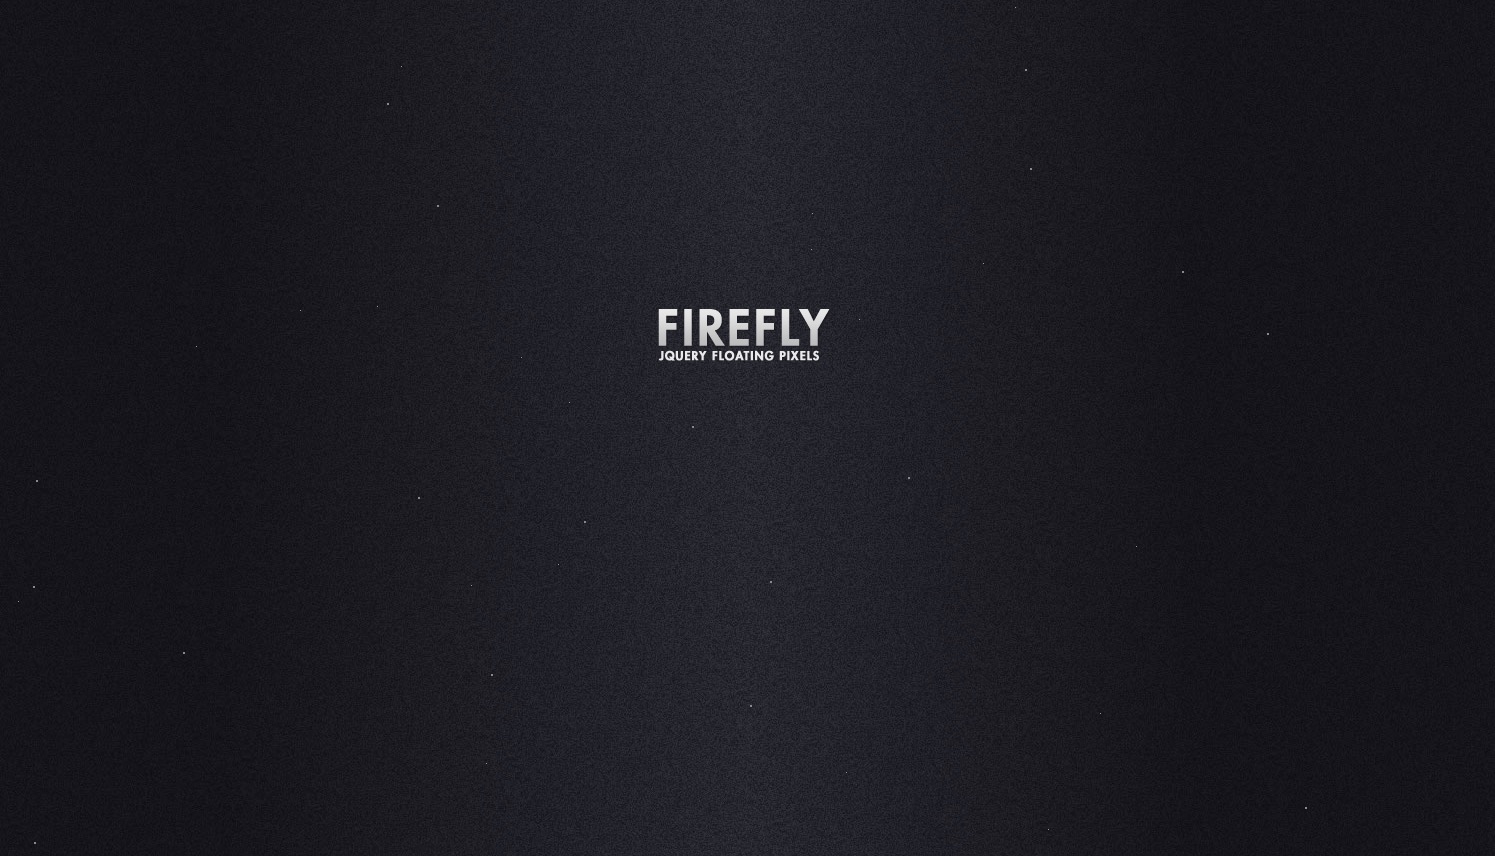 We all love fireflies – jQuery Firefly